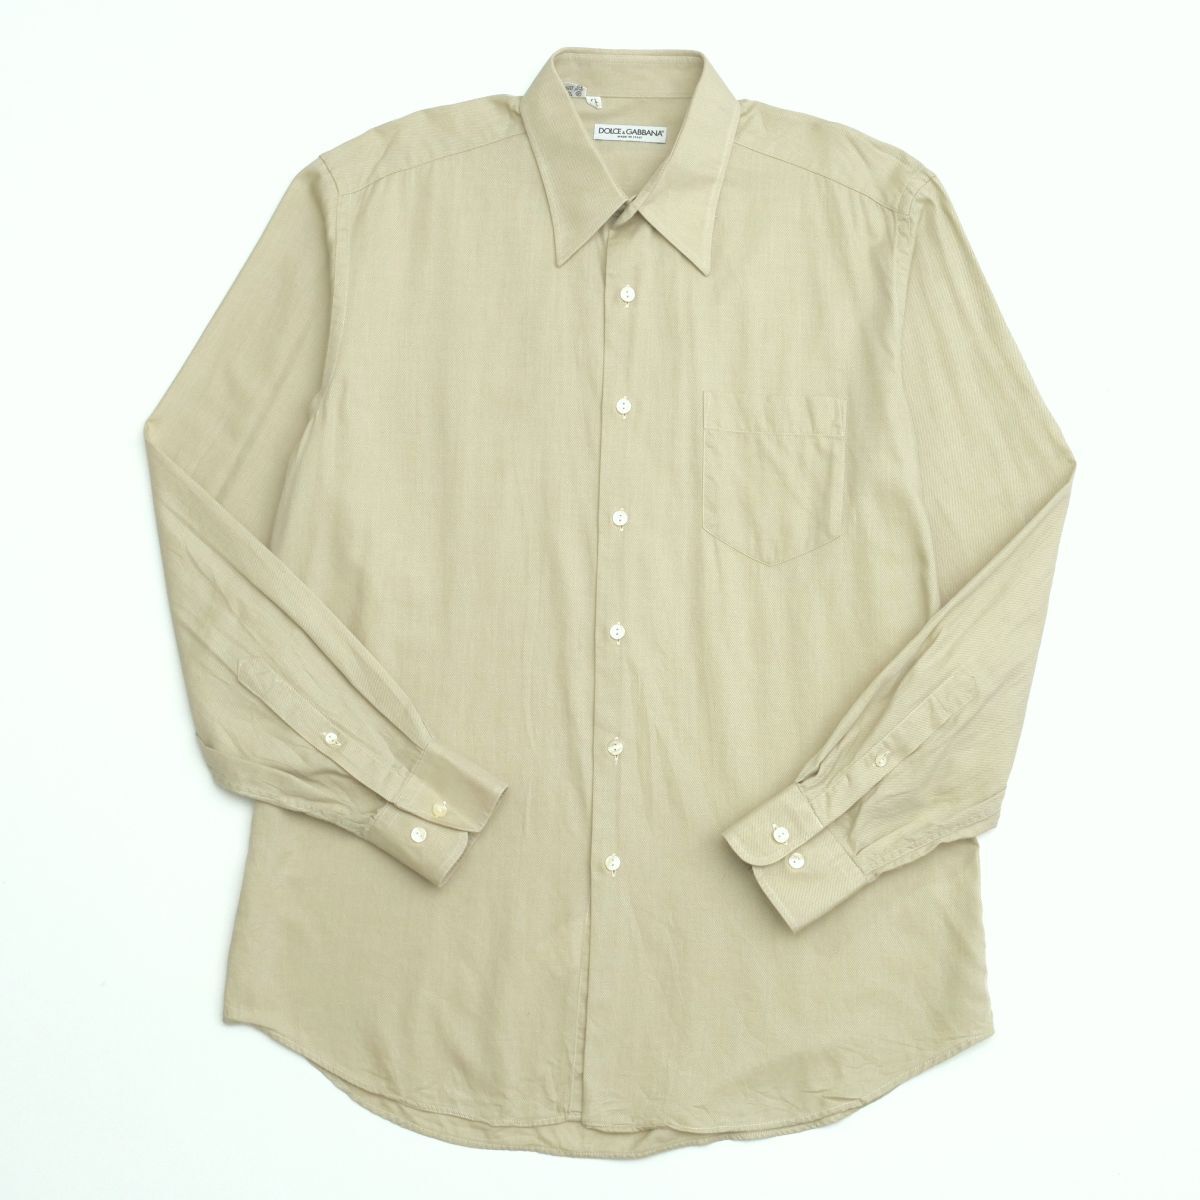 W0933v Italy made Dolce & Gabbana men's 41/16 cotton shirt long sleeve shirt green group 